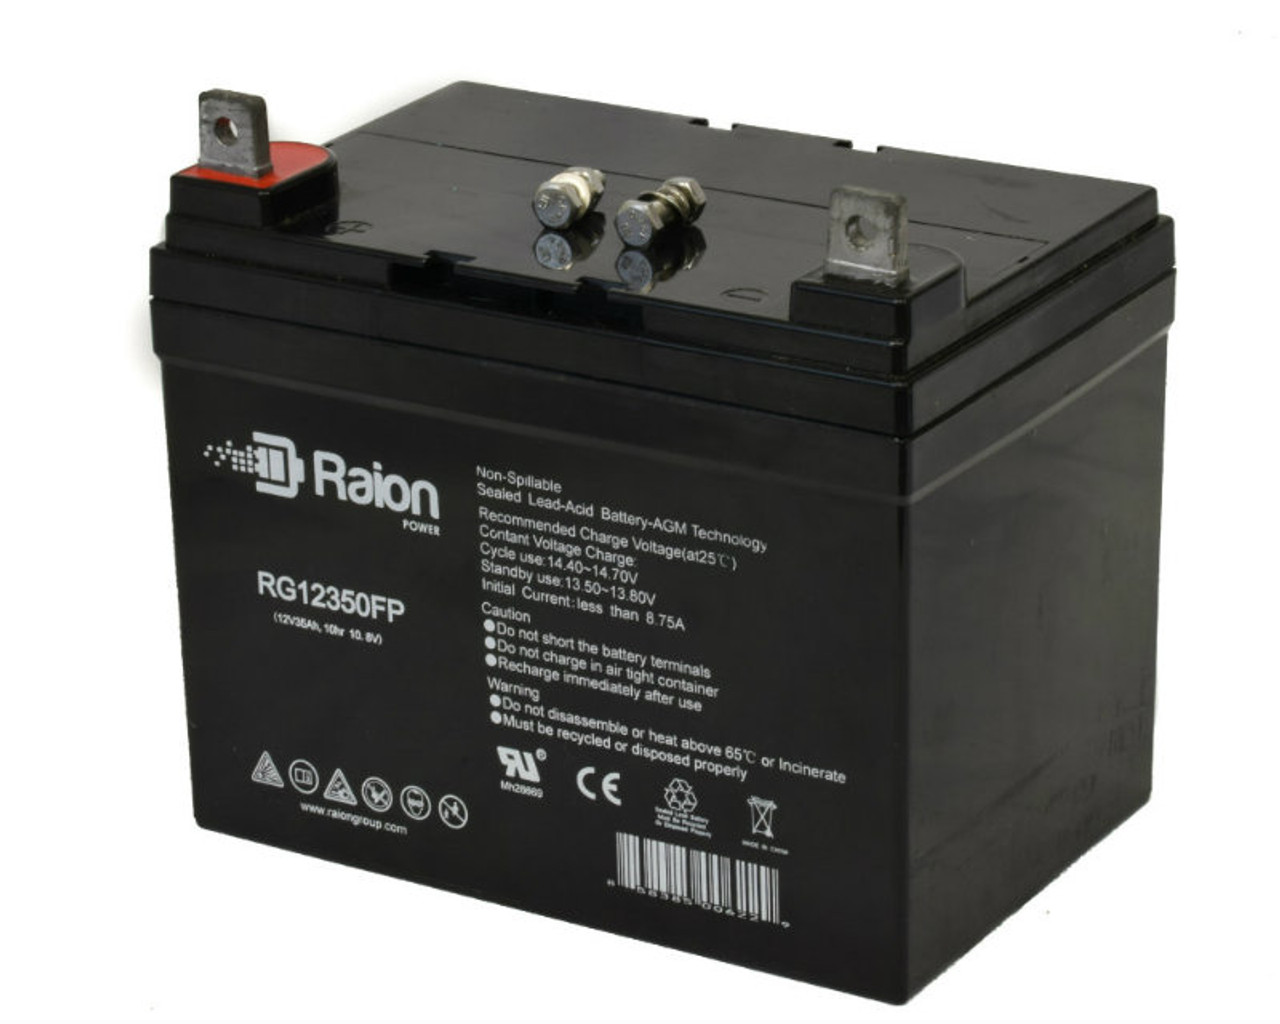 Raion Power Replacement 12V 35Ah RG12350FP Battery for Honda H1011